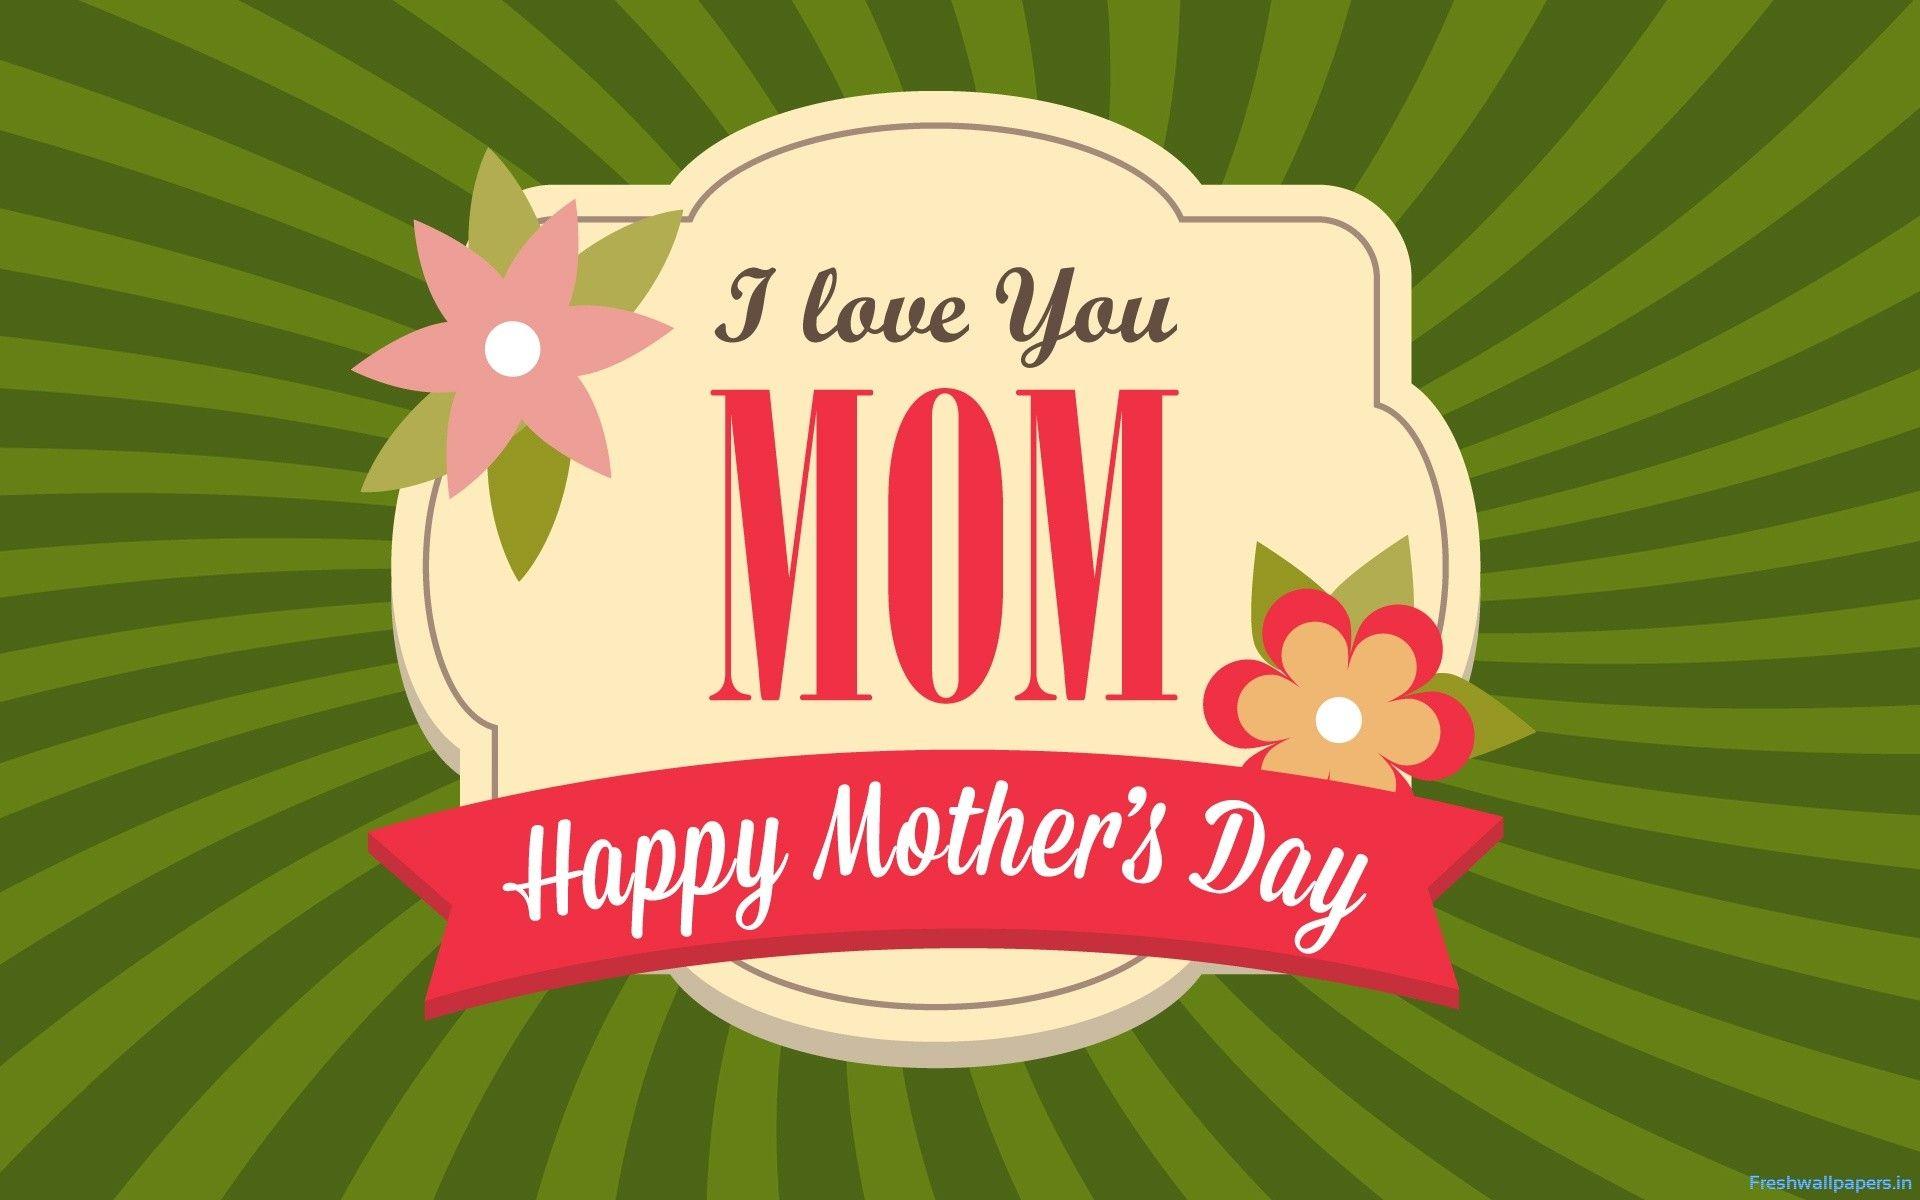 I Love U MOM Wallpaper Download, Image For Mother's Love